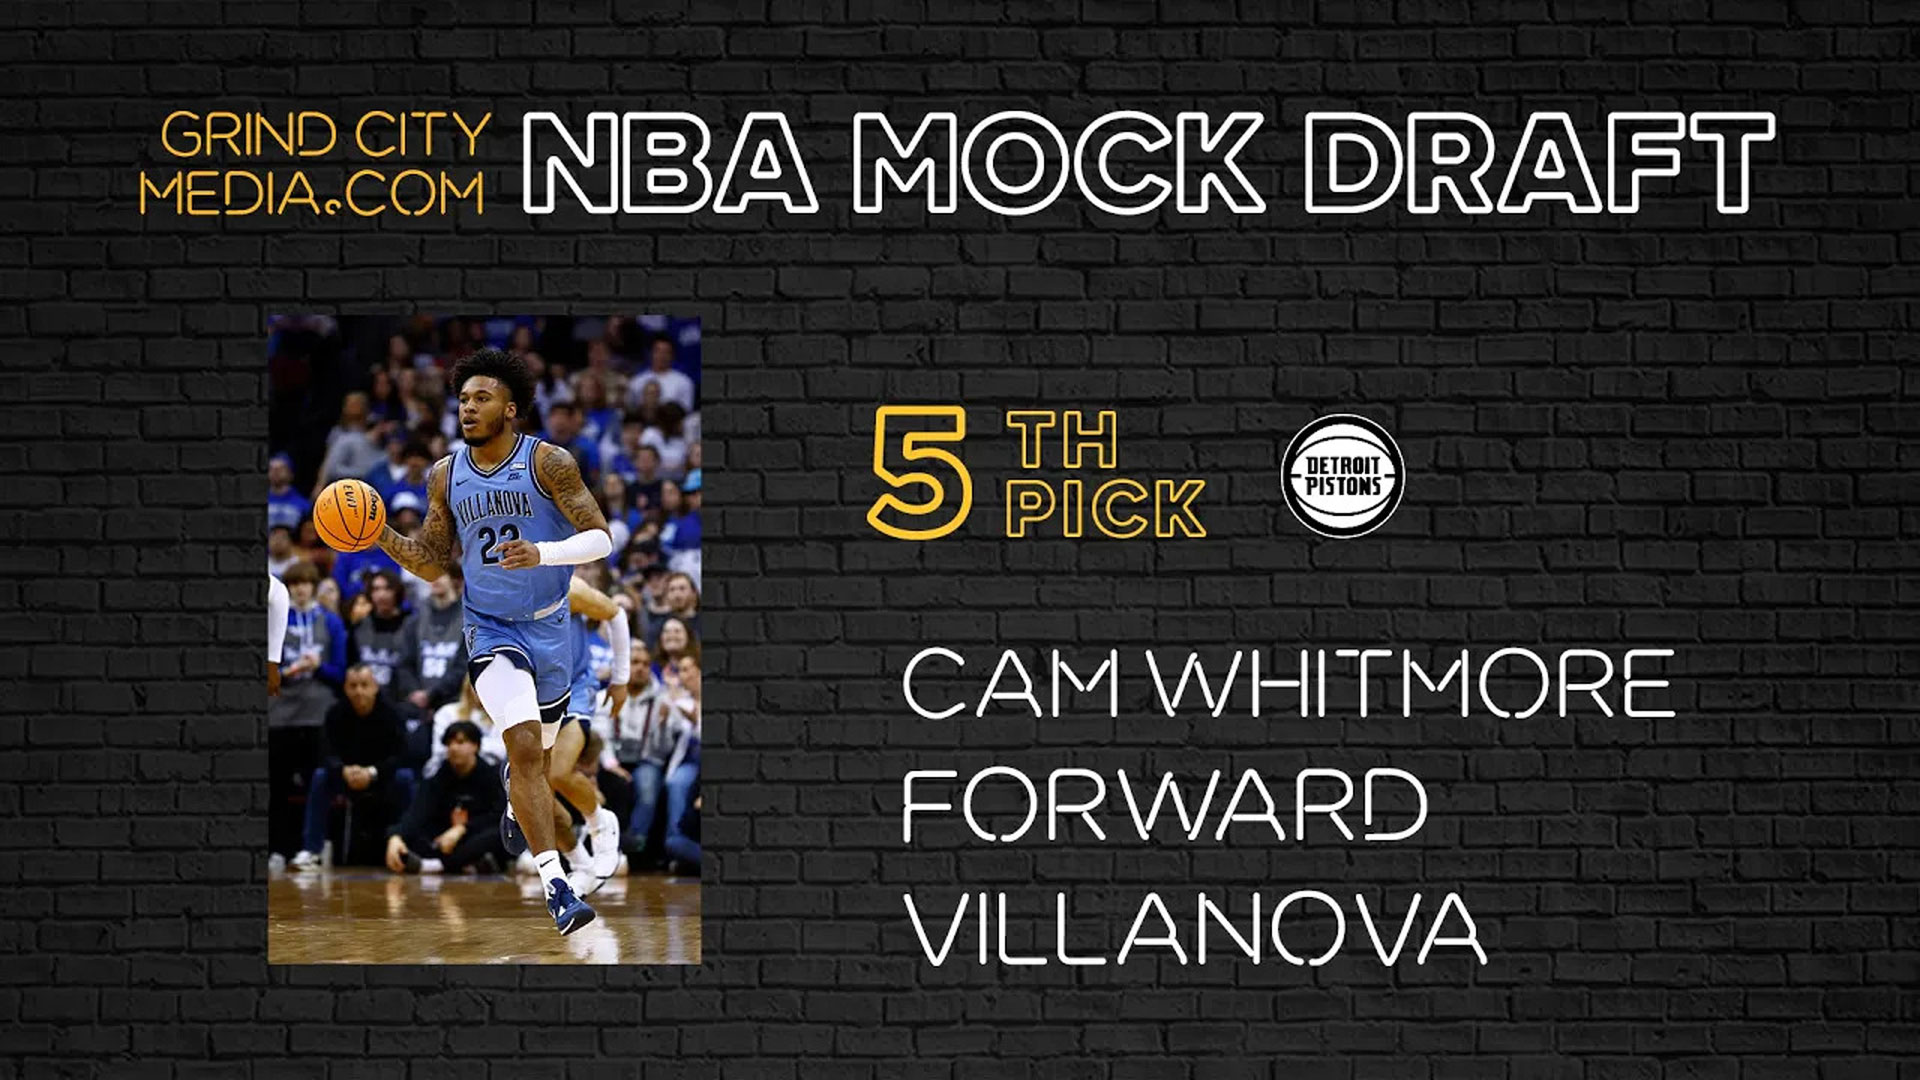 2023 Grind City Media NBA Mock Draft - 5th Pick - Cam Whitmore, Forward, Villanova to Detroit Pistons